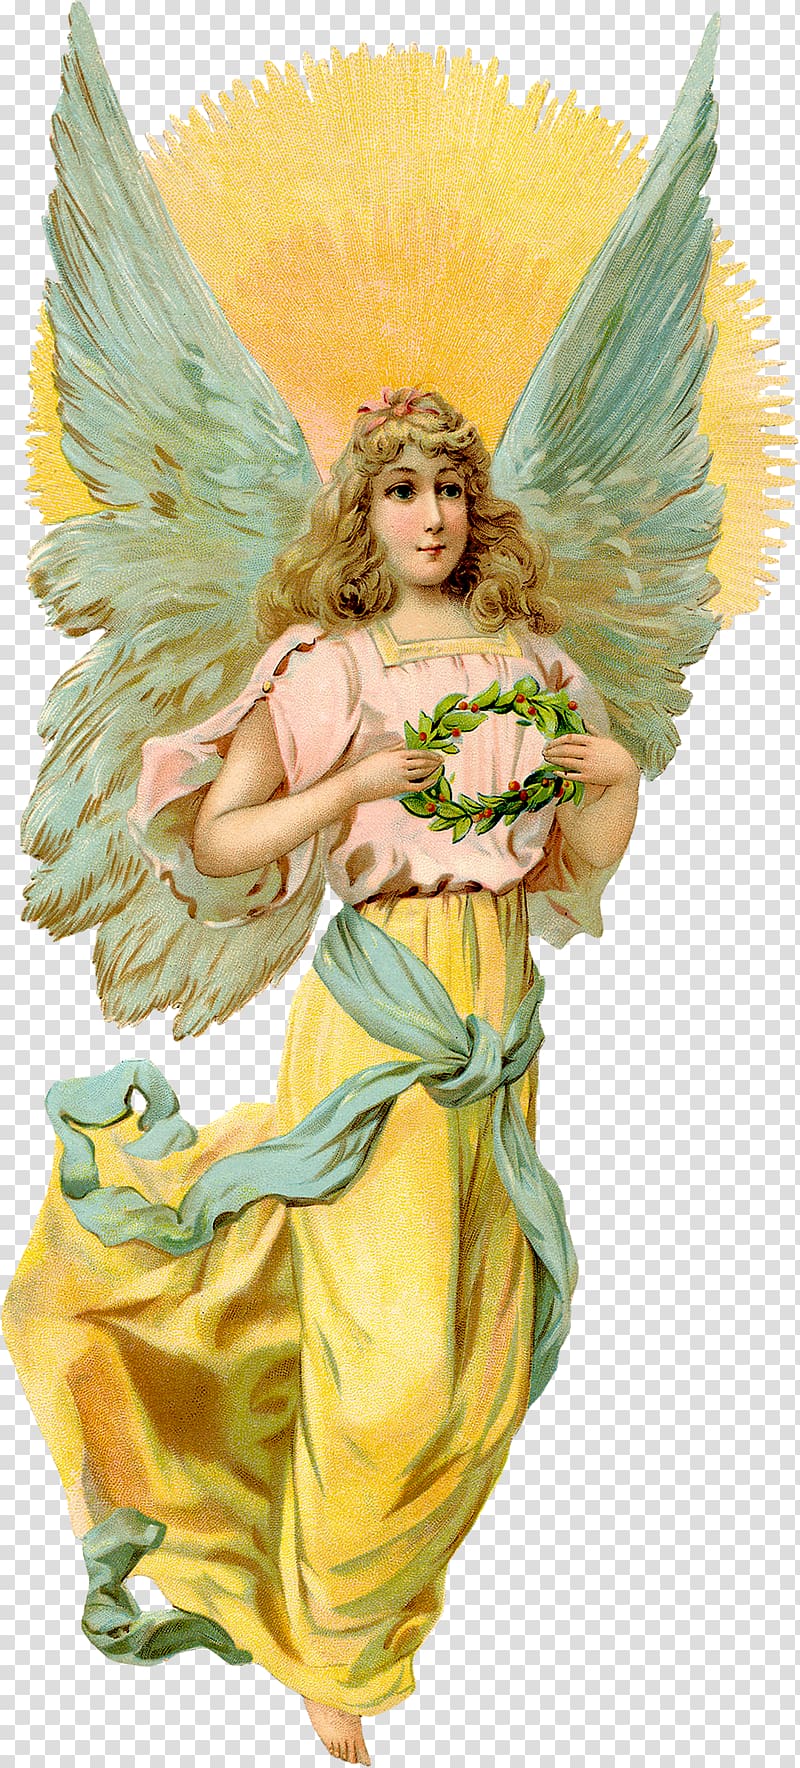 Mythology Legendary creature Fairy Character Supernatural, blue wreath transparent background PNG clipart